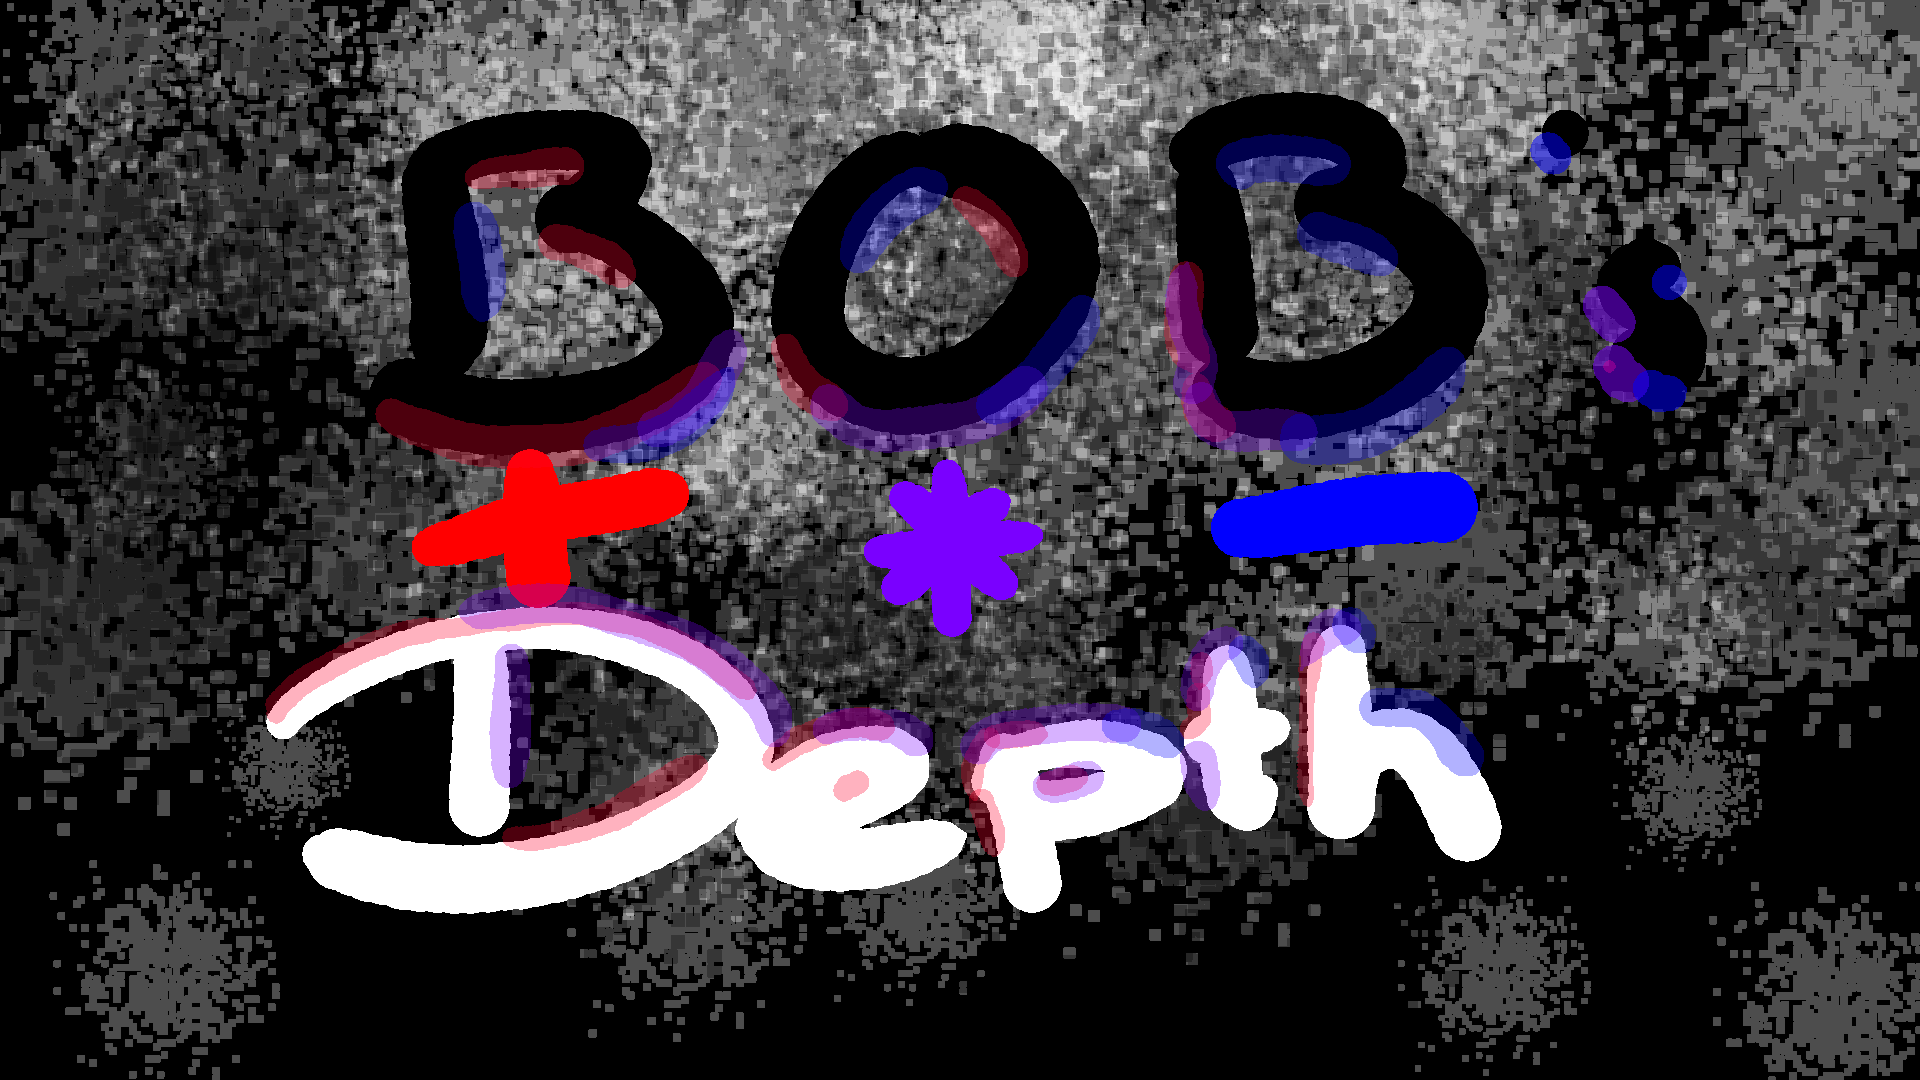 Bob's Depth